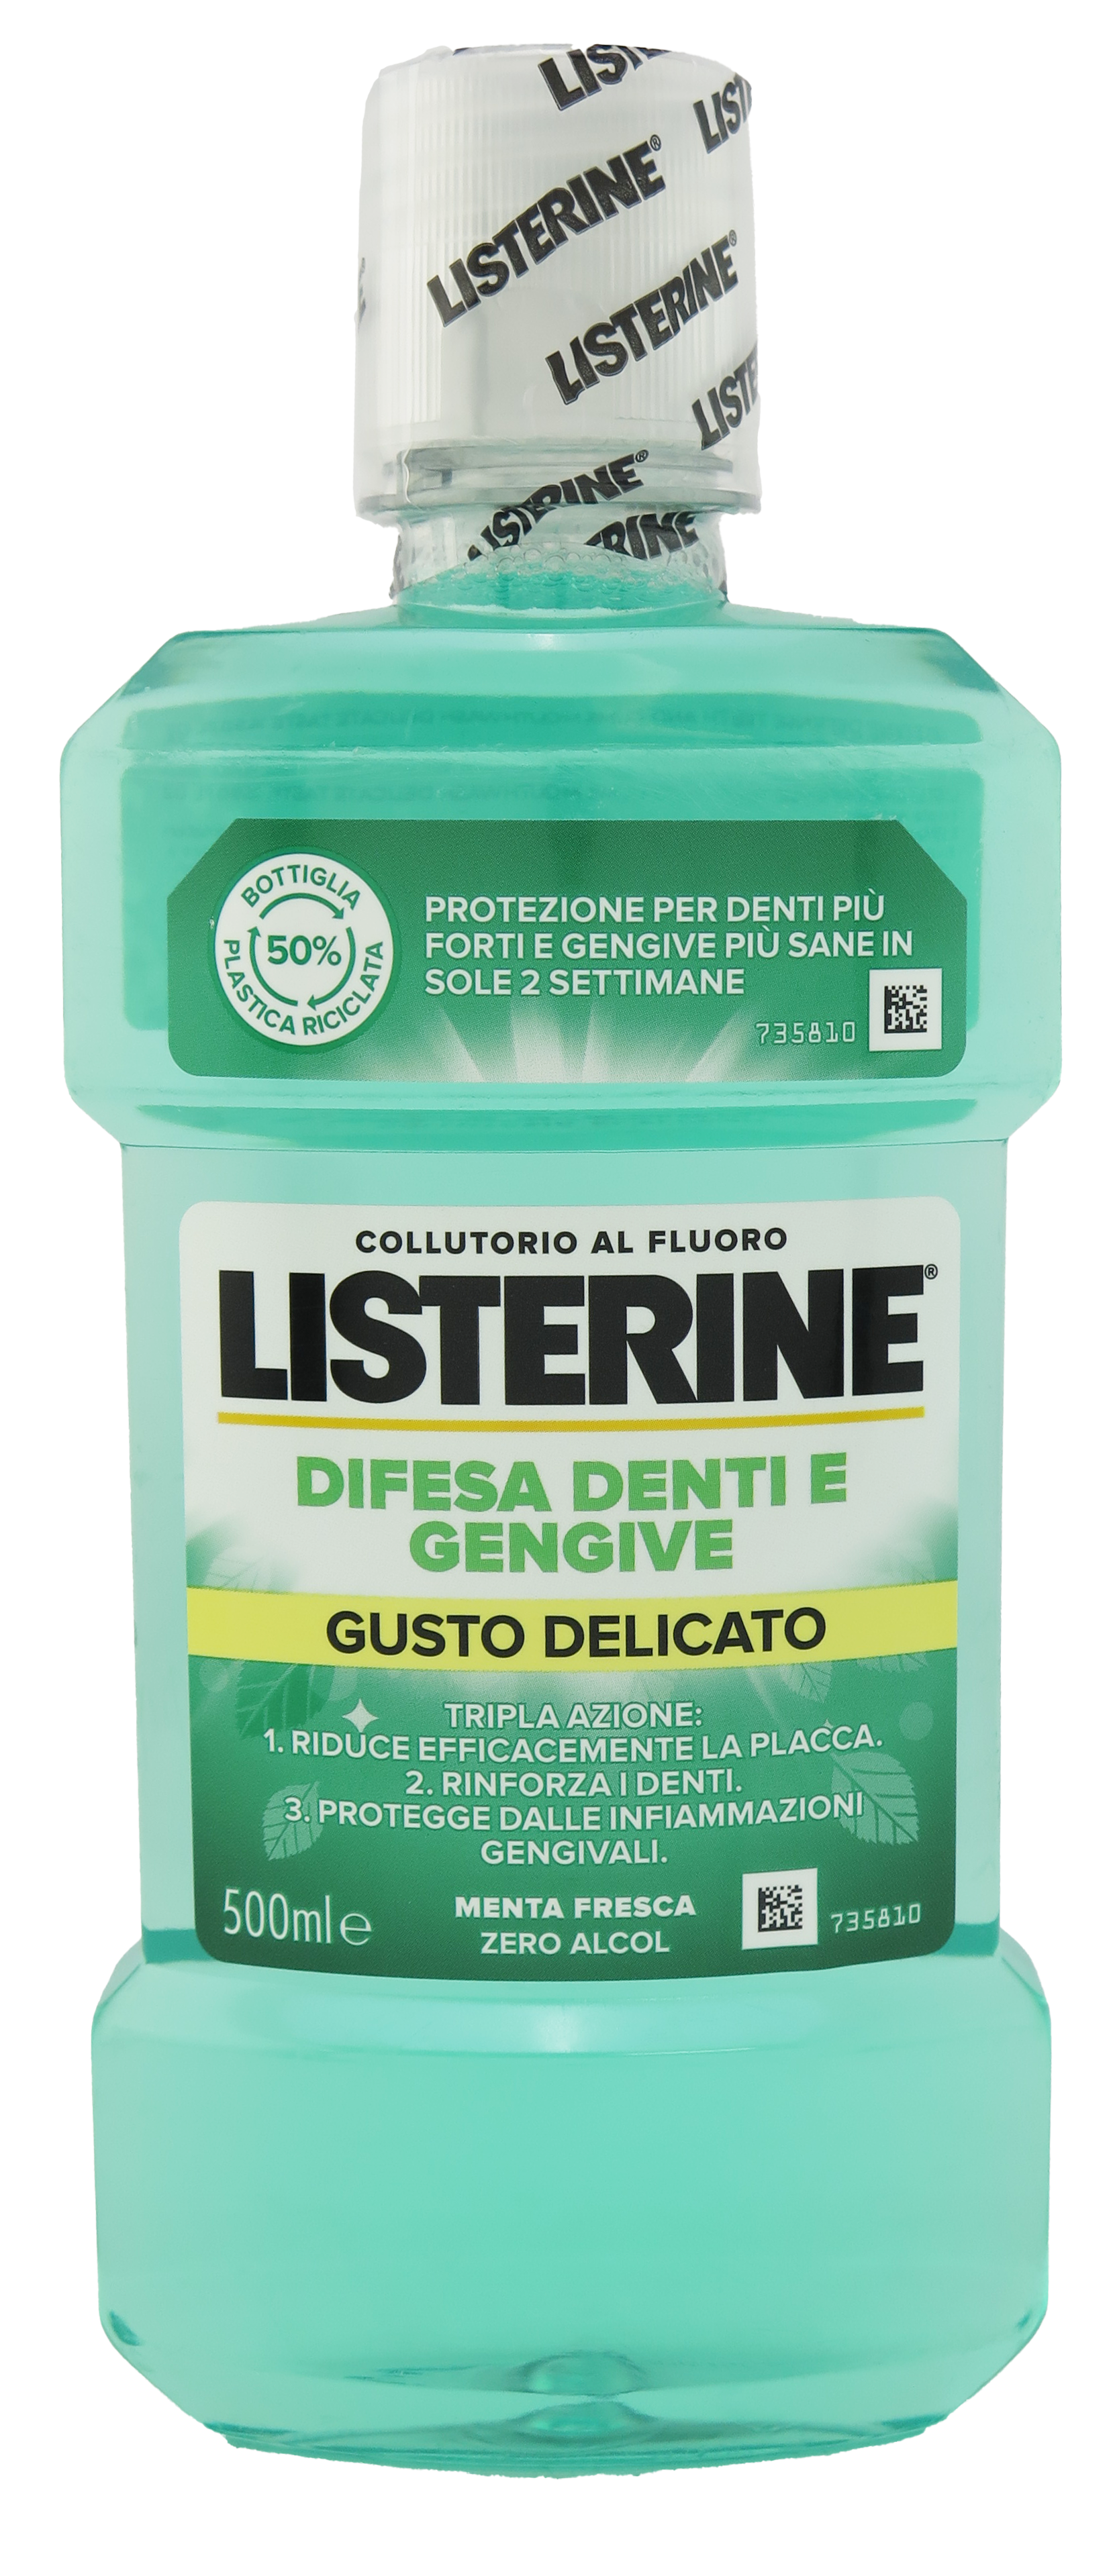 Listerine Defense Teeth and Gums Mouthwash Delicate Taste 500ml/16.9oz